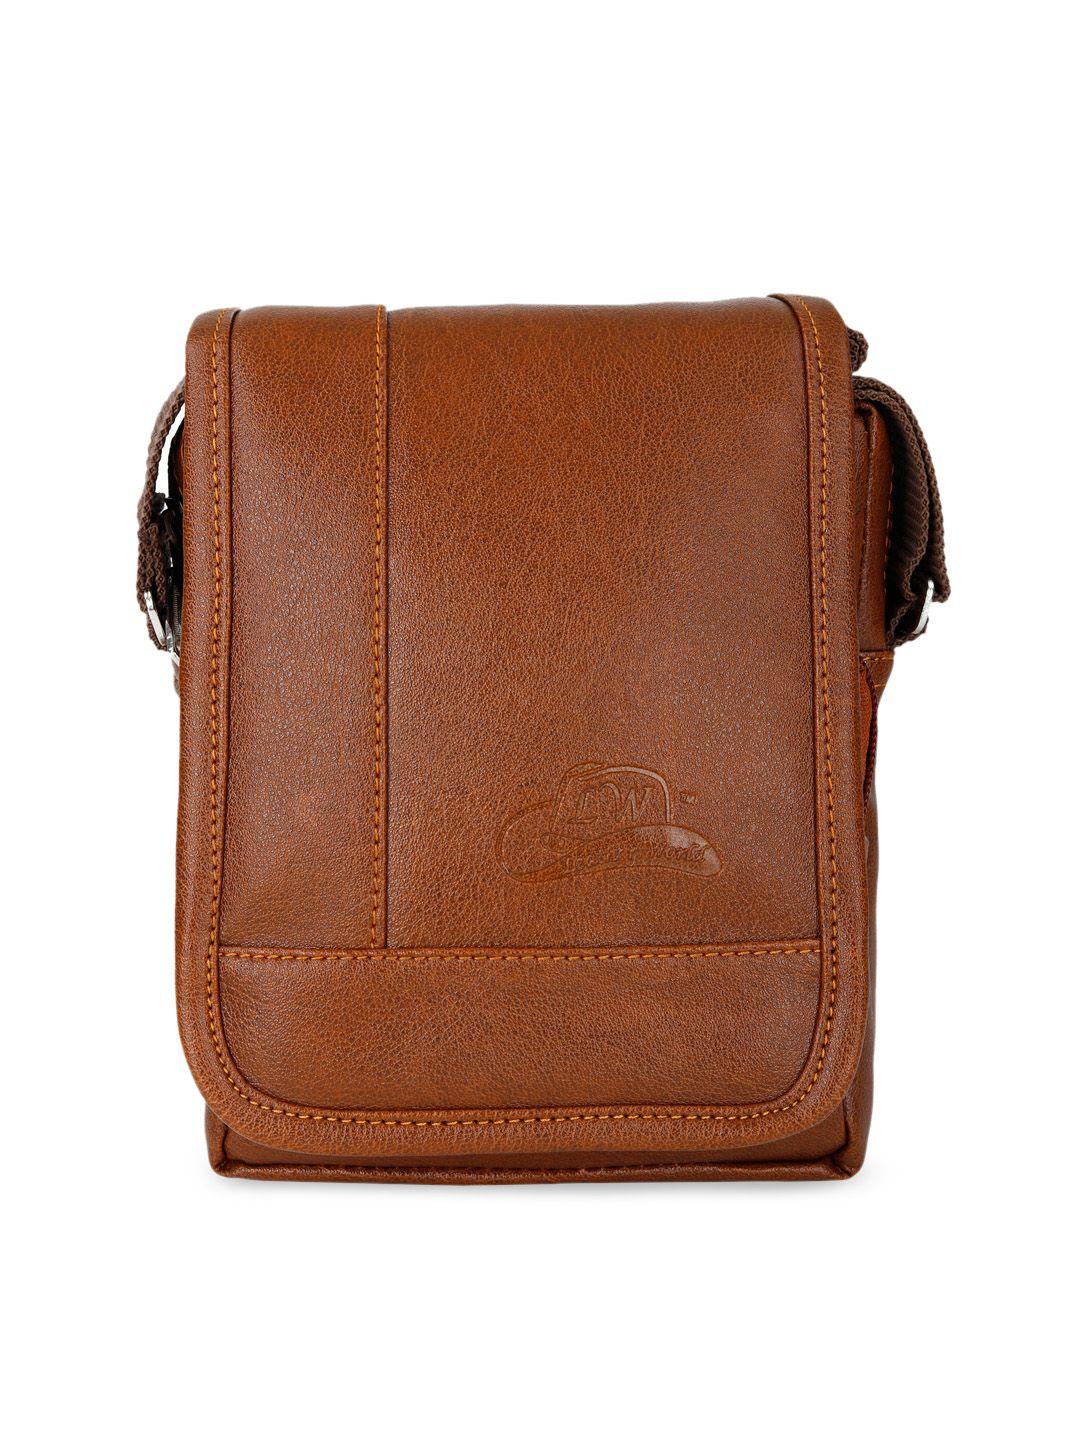 leather world unisex brown solid sling bag